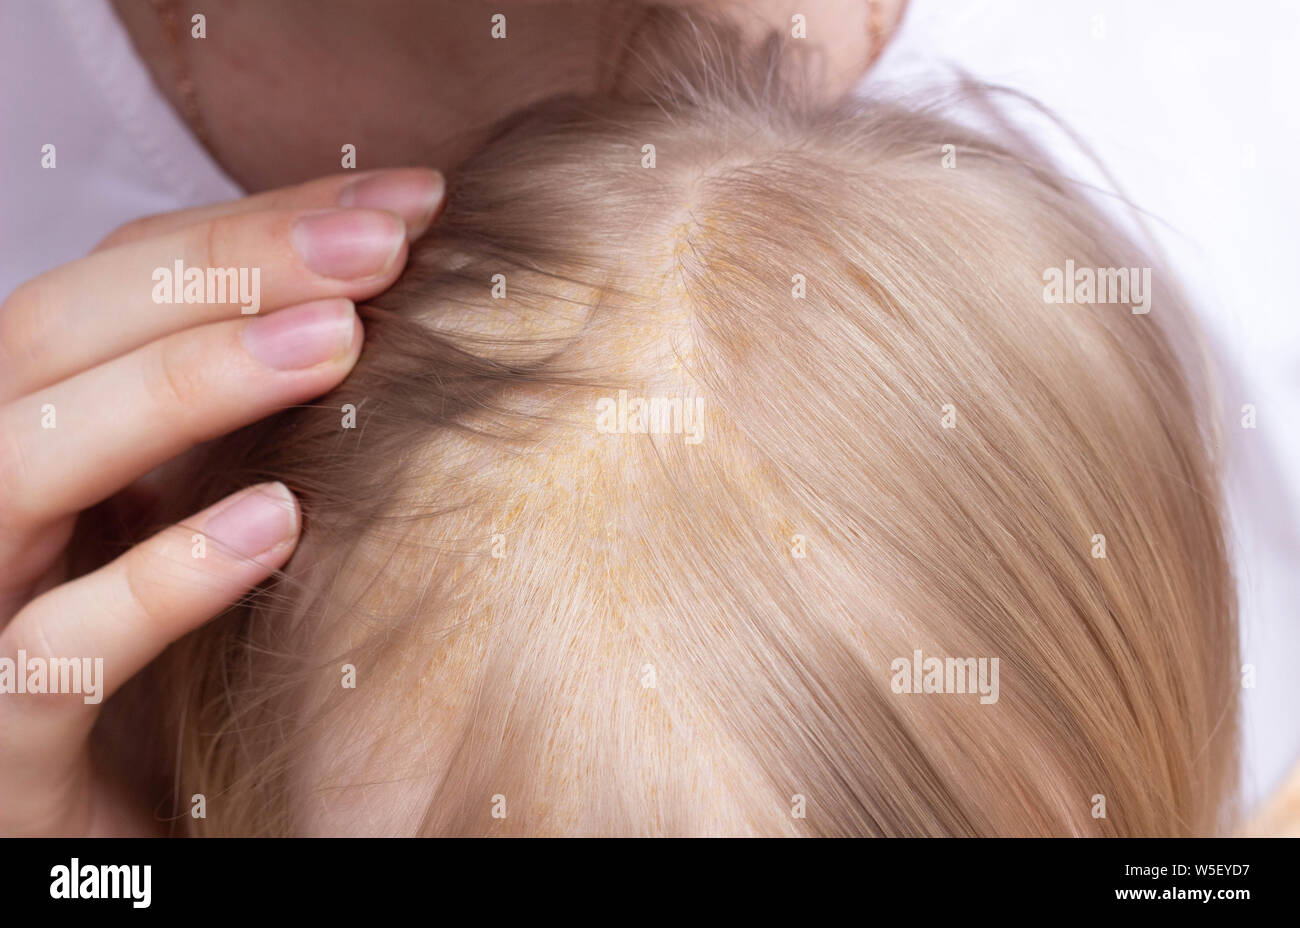 Seborrheic skin rash on the child s head, seborrheic dermatitis, close-up, inflammatory Stock Photo